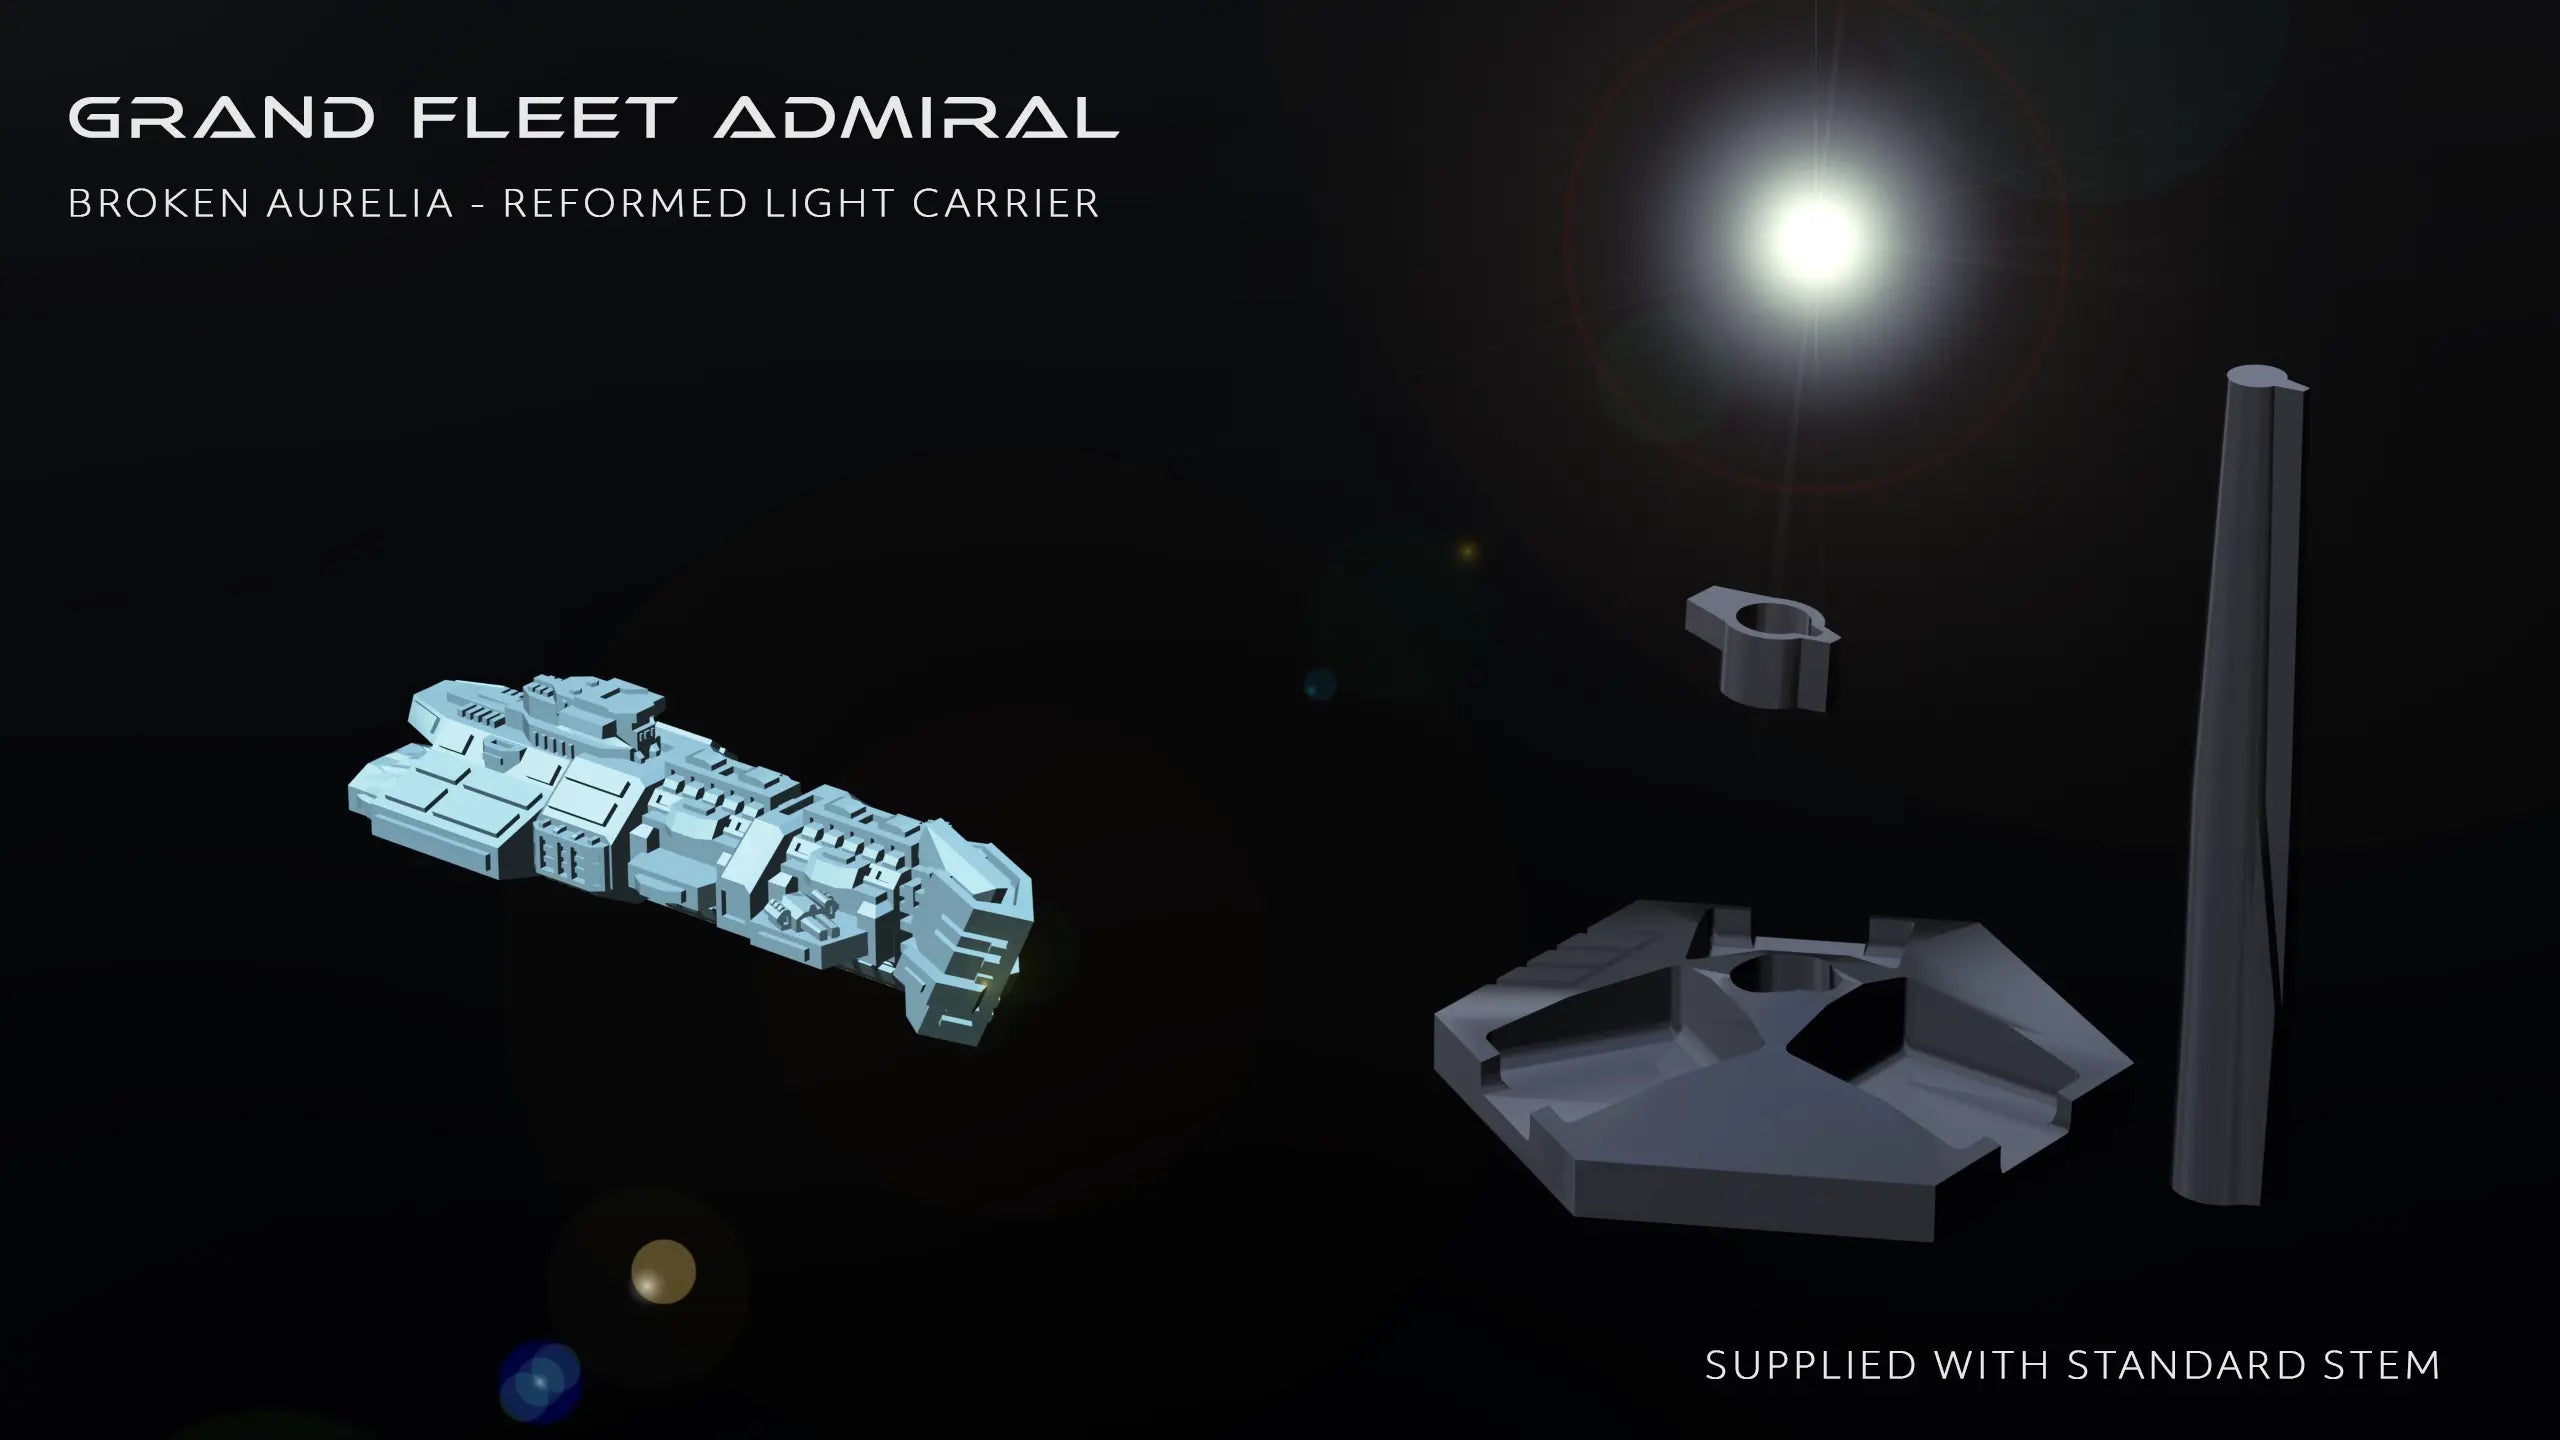 Imperial Hemina - Reformed Light Carrier Grand Fleet Admiral